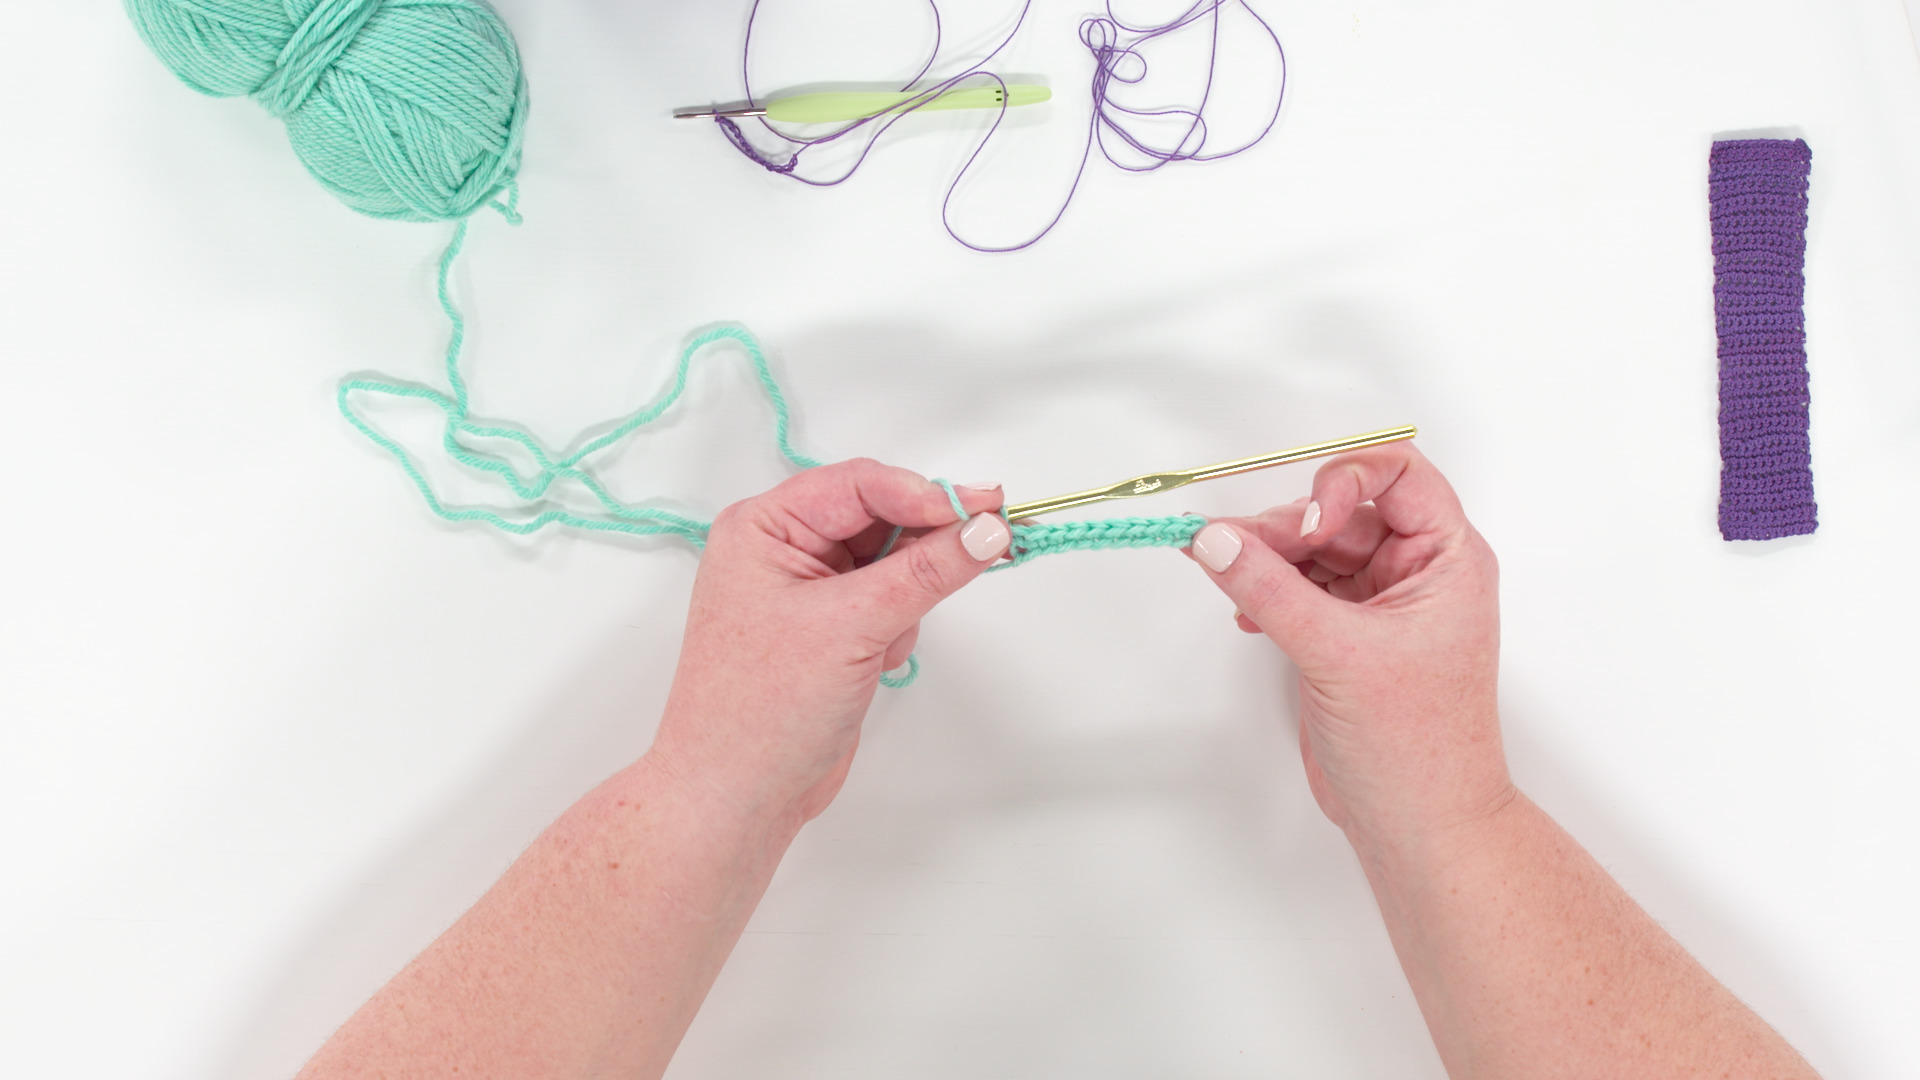 Working Single Crochet into Foundation Chain